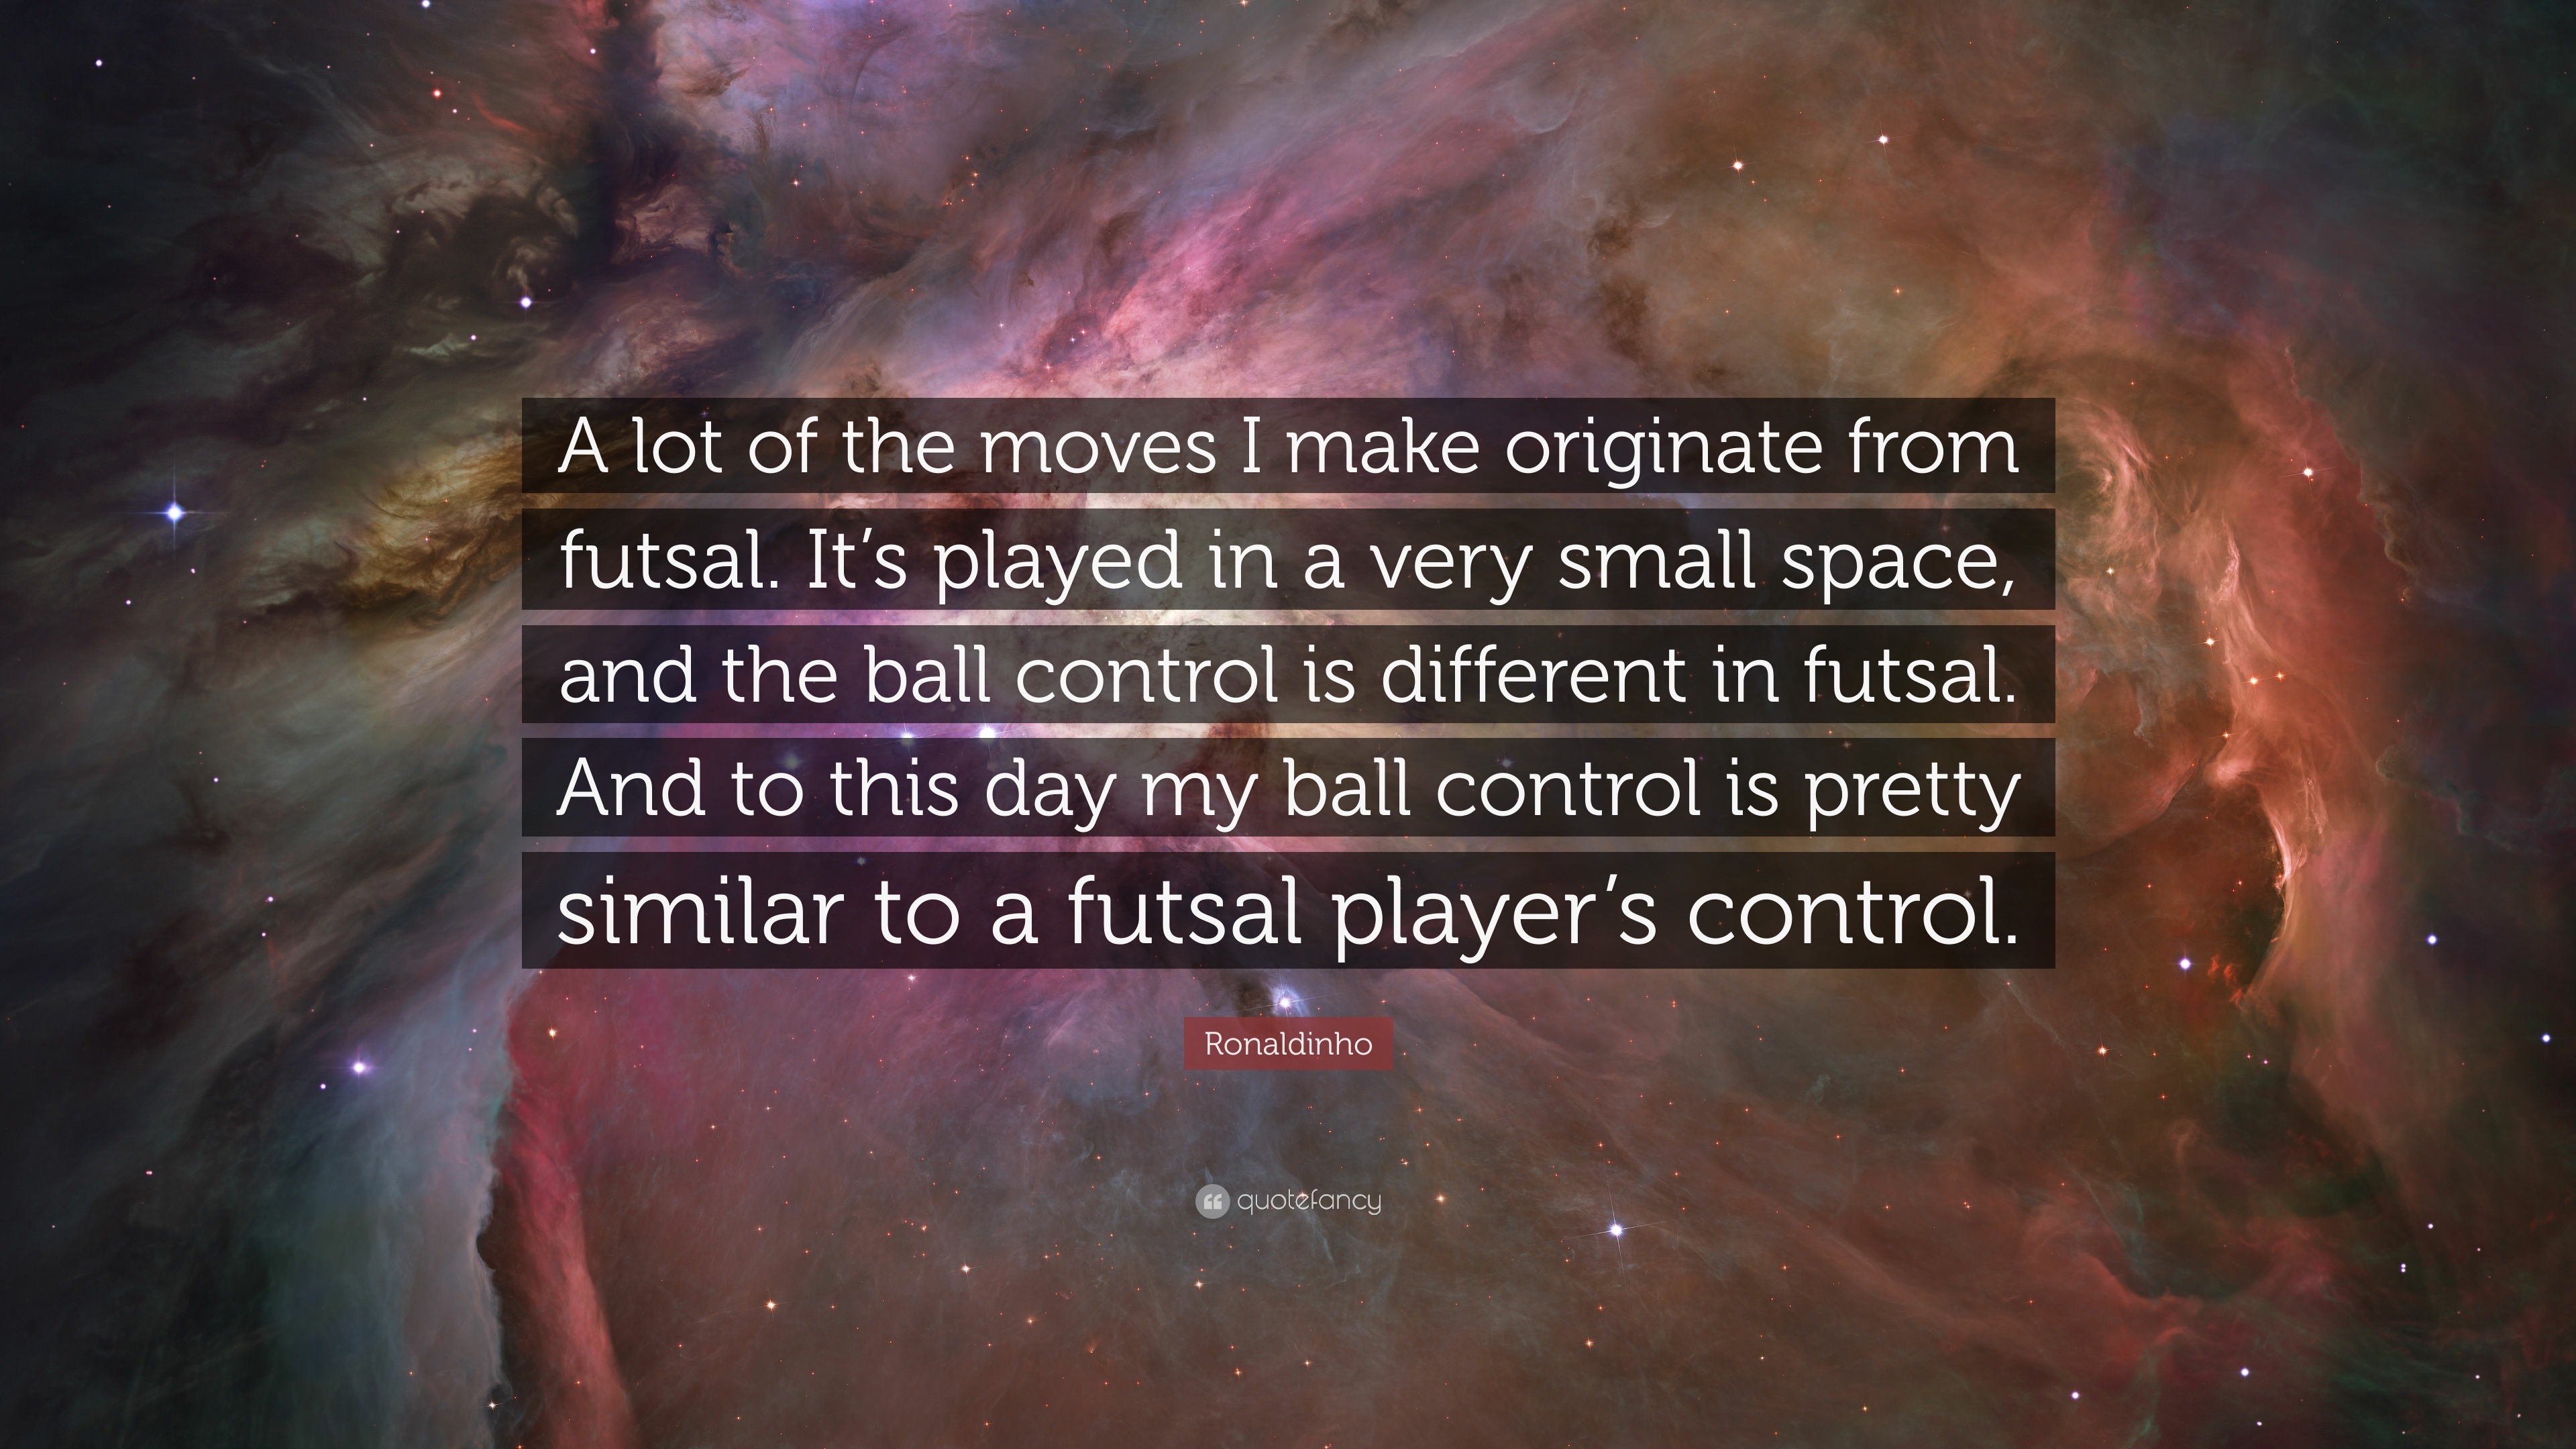 Ronaldinho Quote: “A lot of the moves I make originate from futsal. It